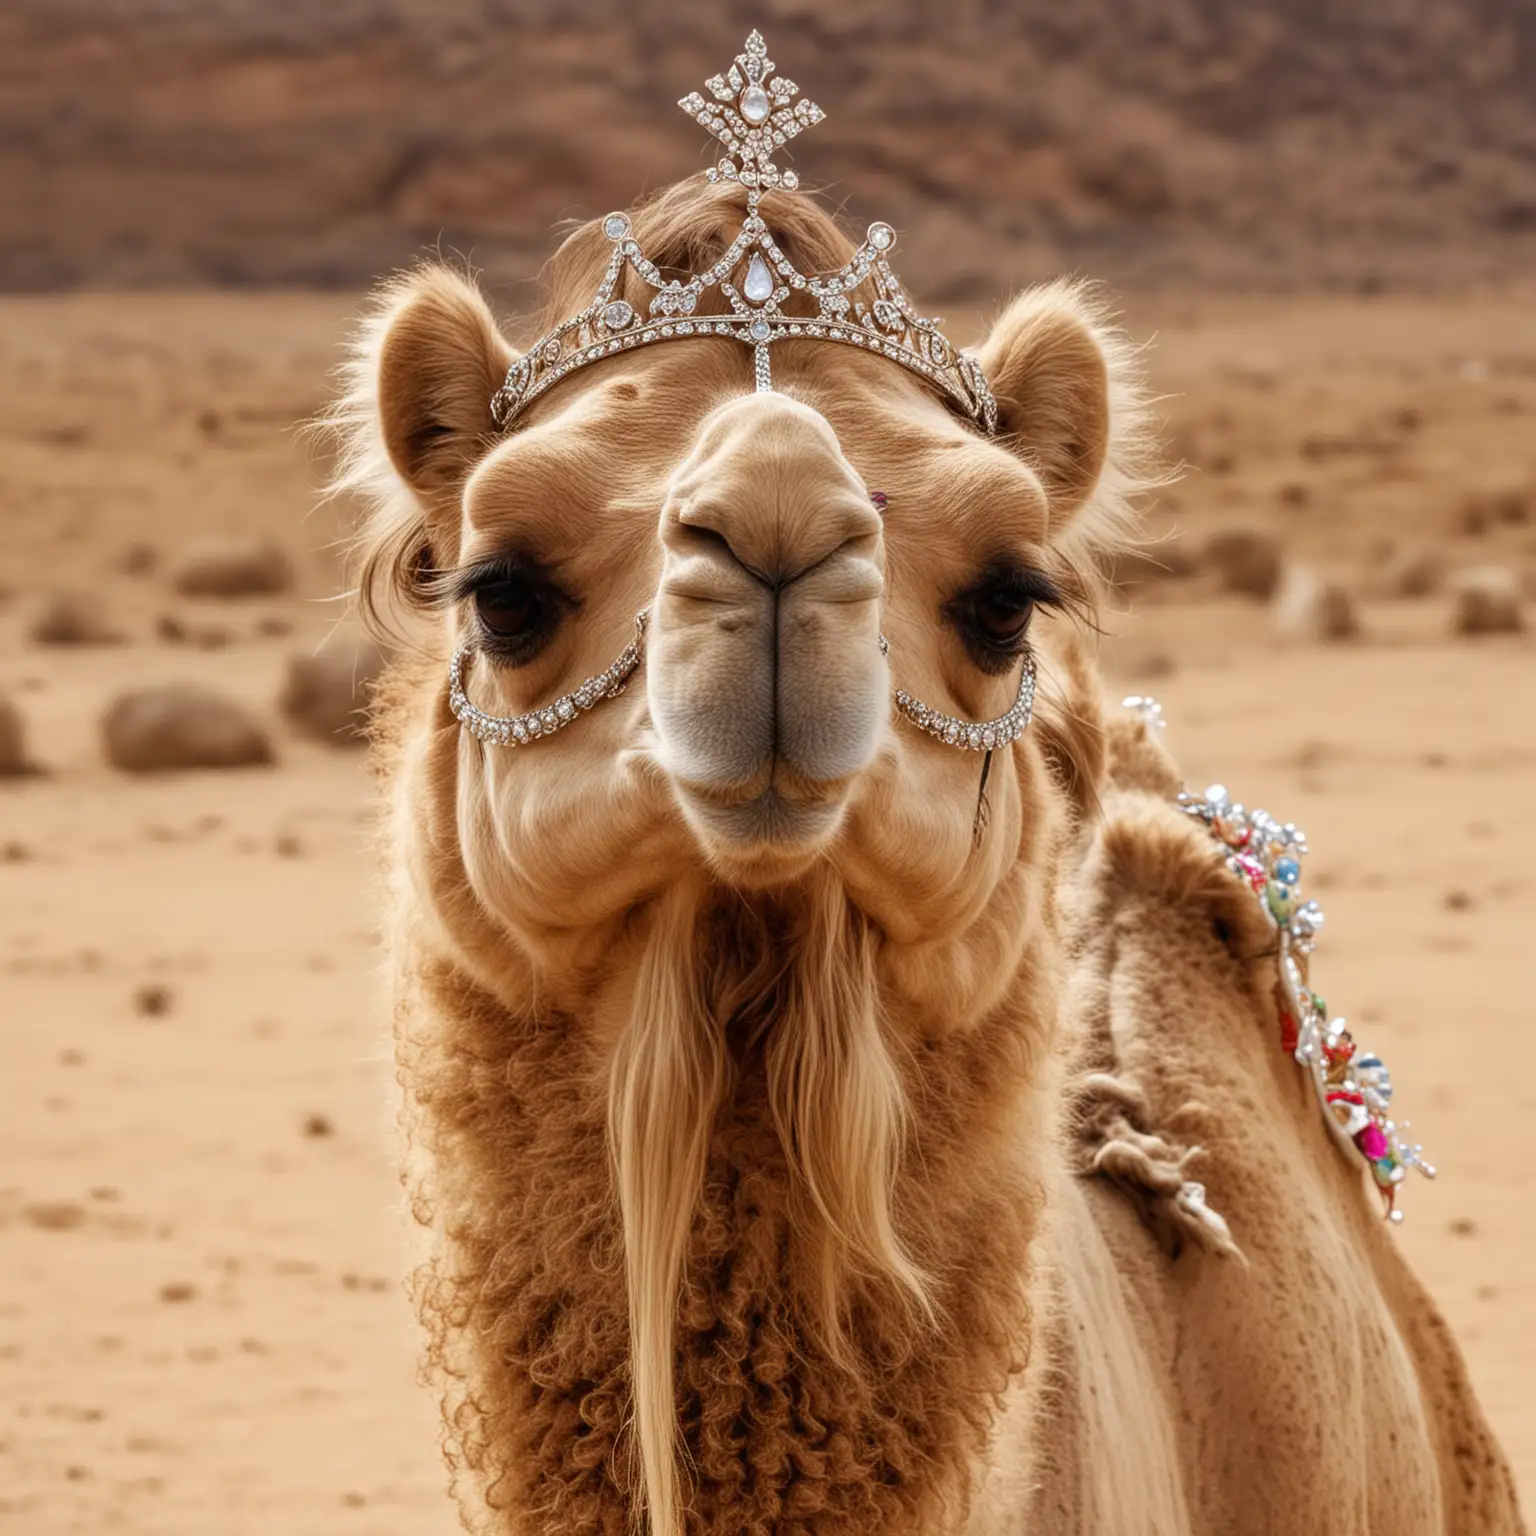 Elegant Camel with Flowing Hair and Tiara